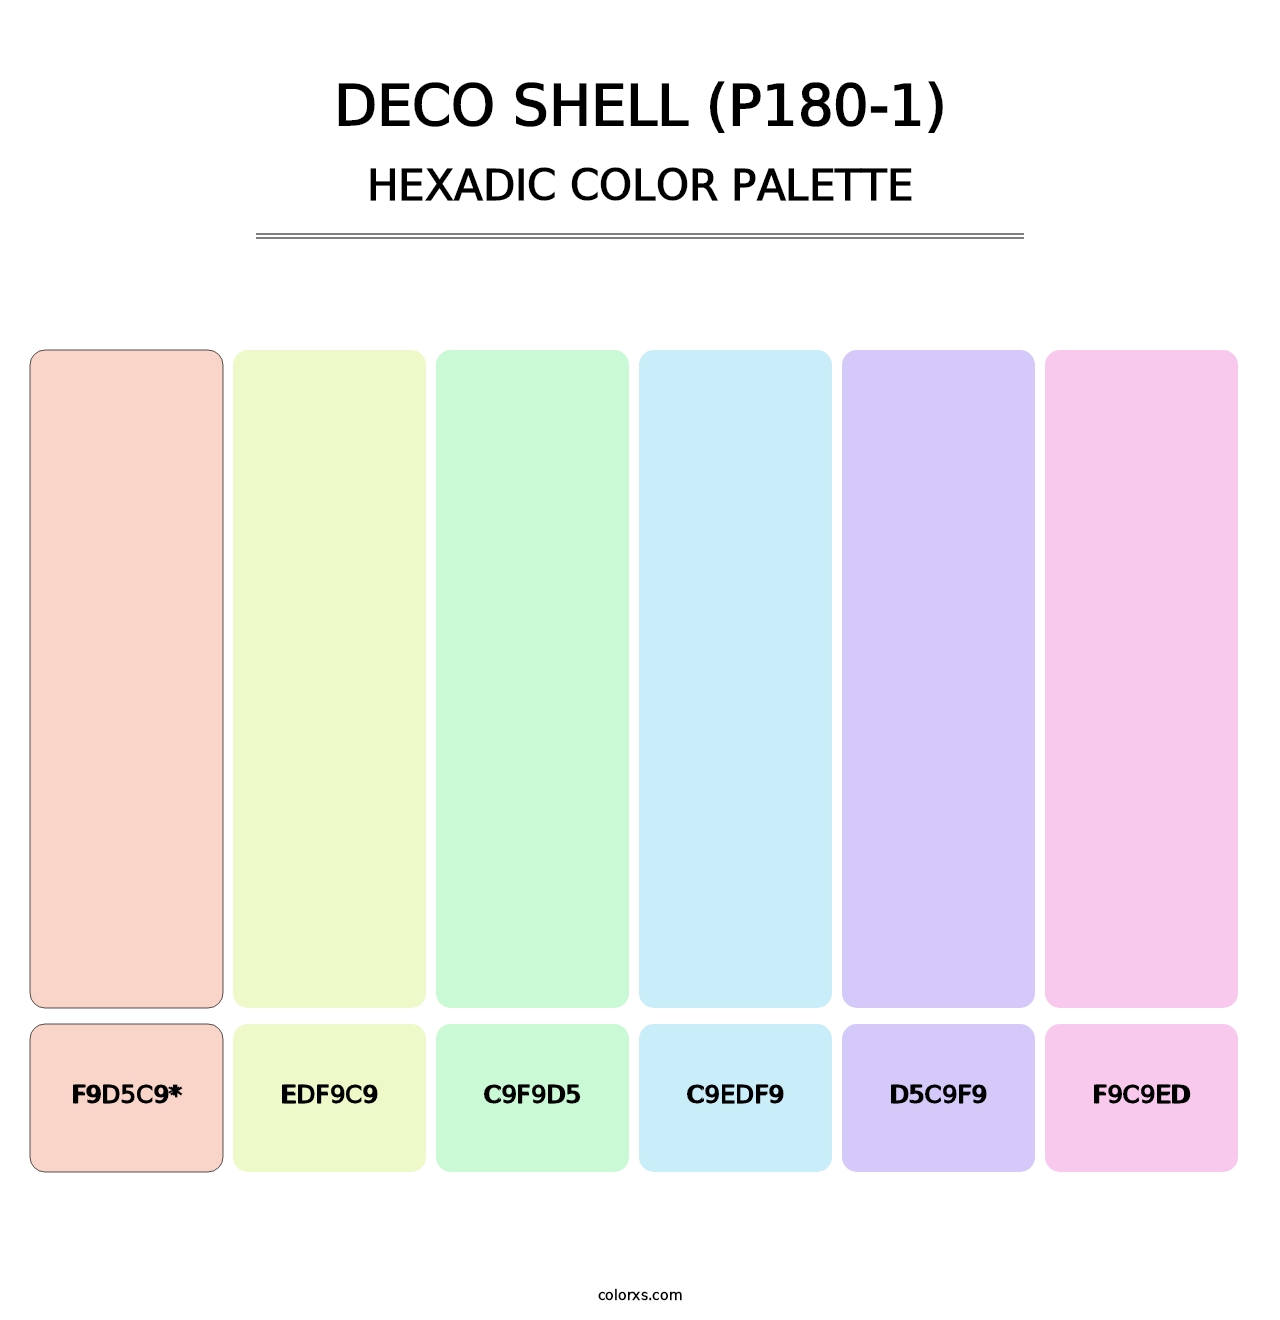 Deco Shell (P180-1) - Hexadic Color Palette